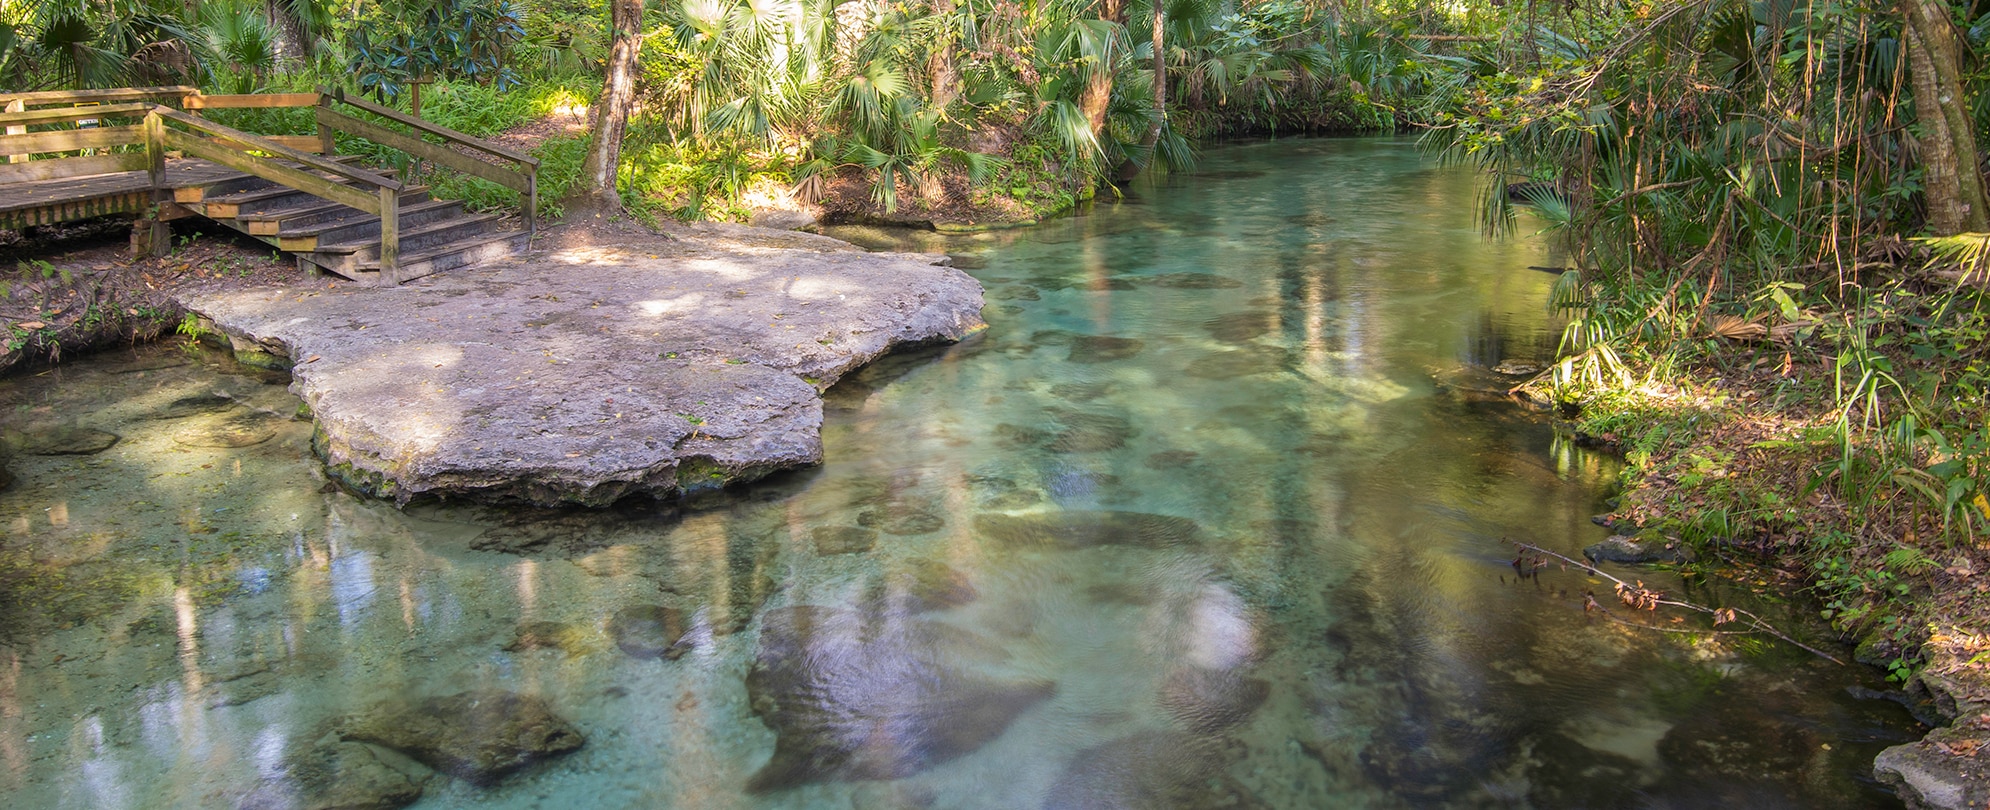 A clear natural spring in Orlando, Florida.